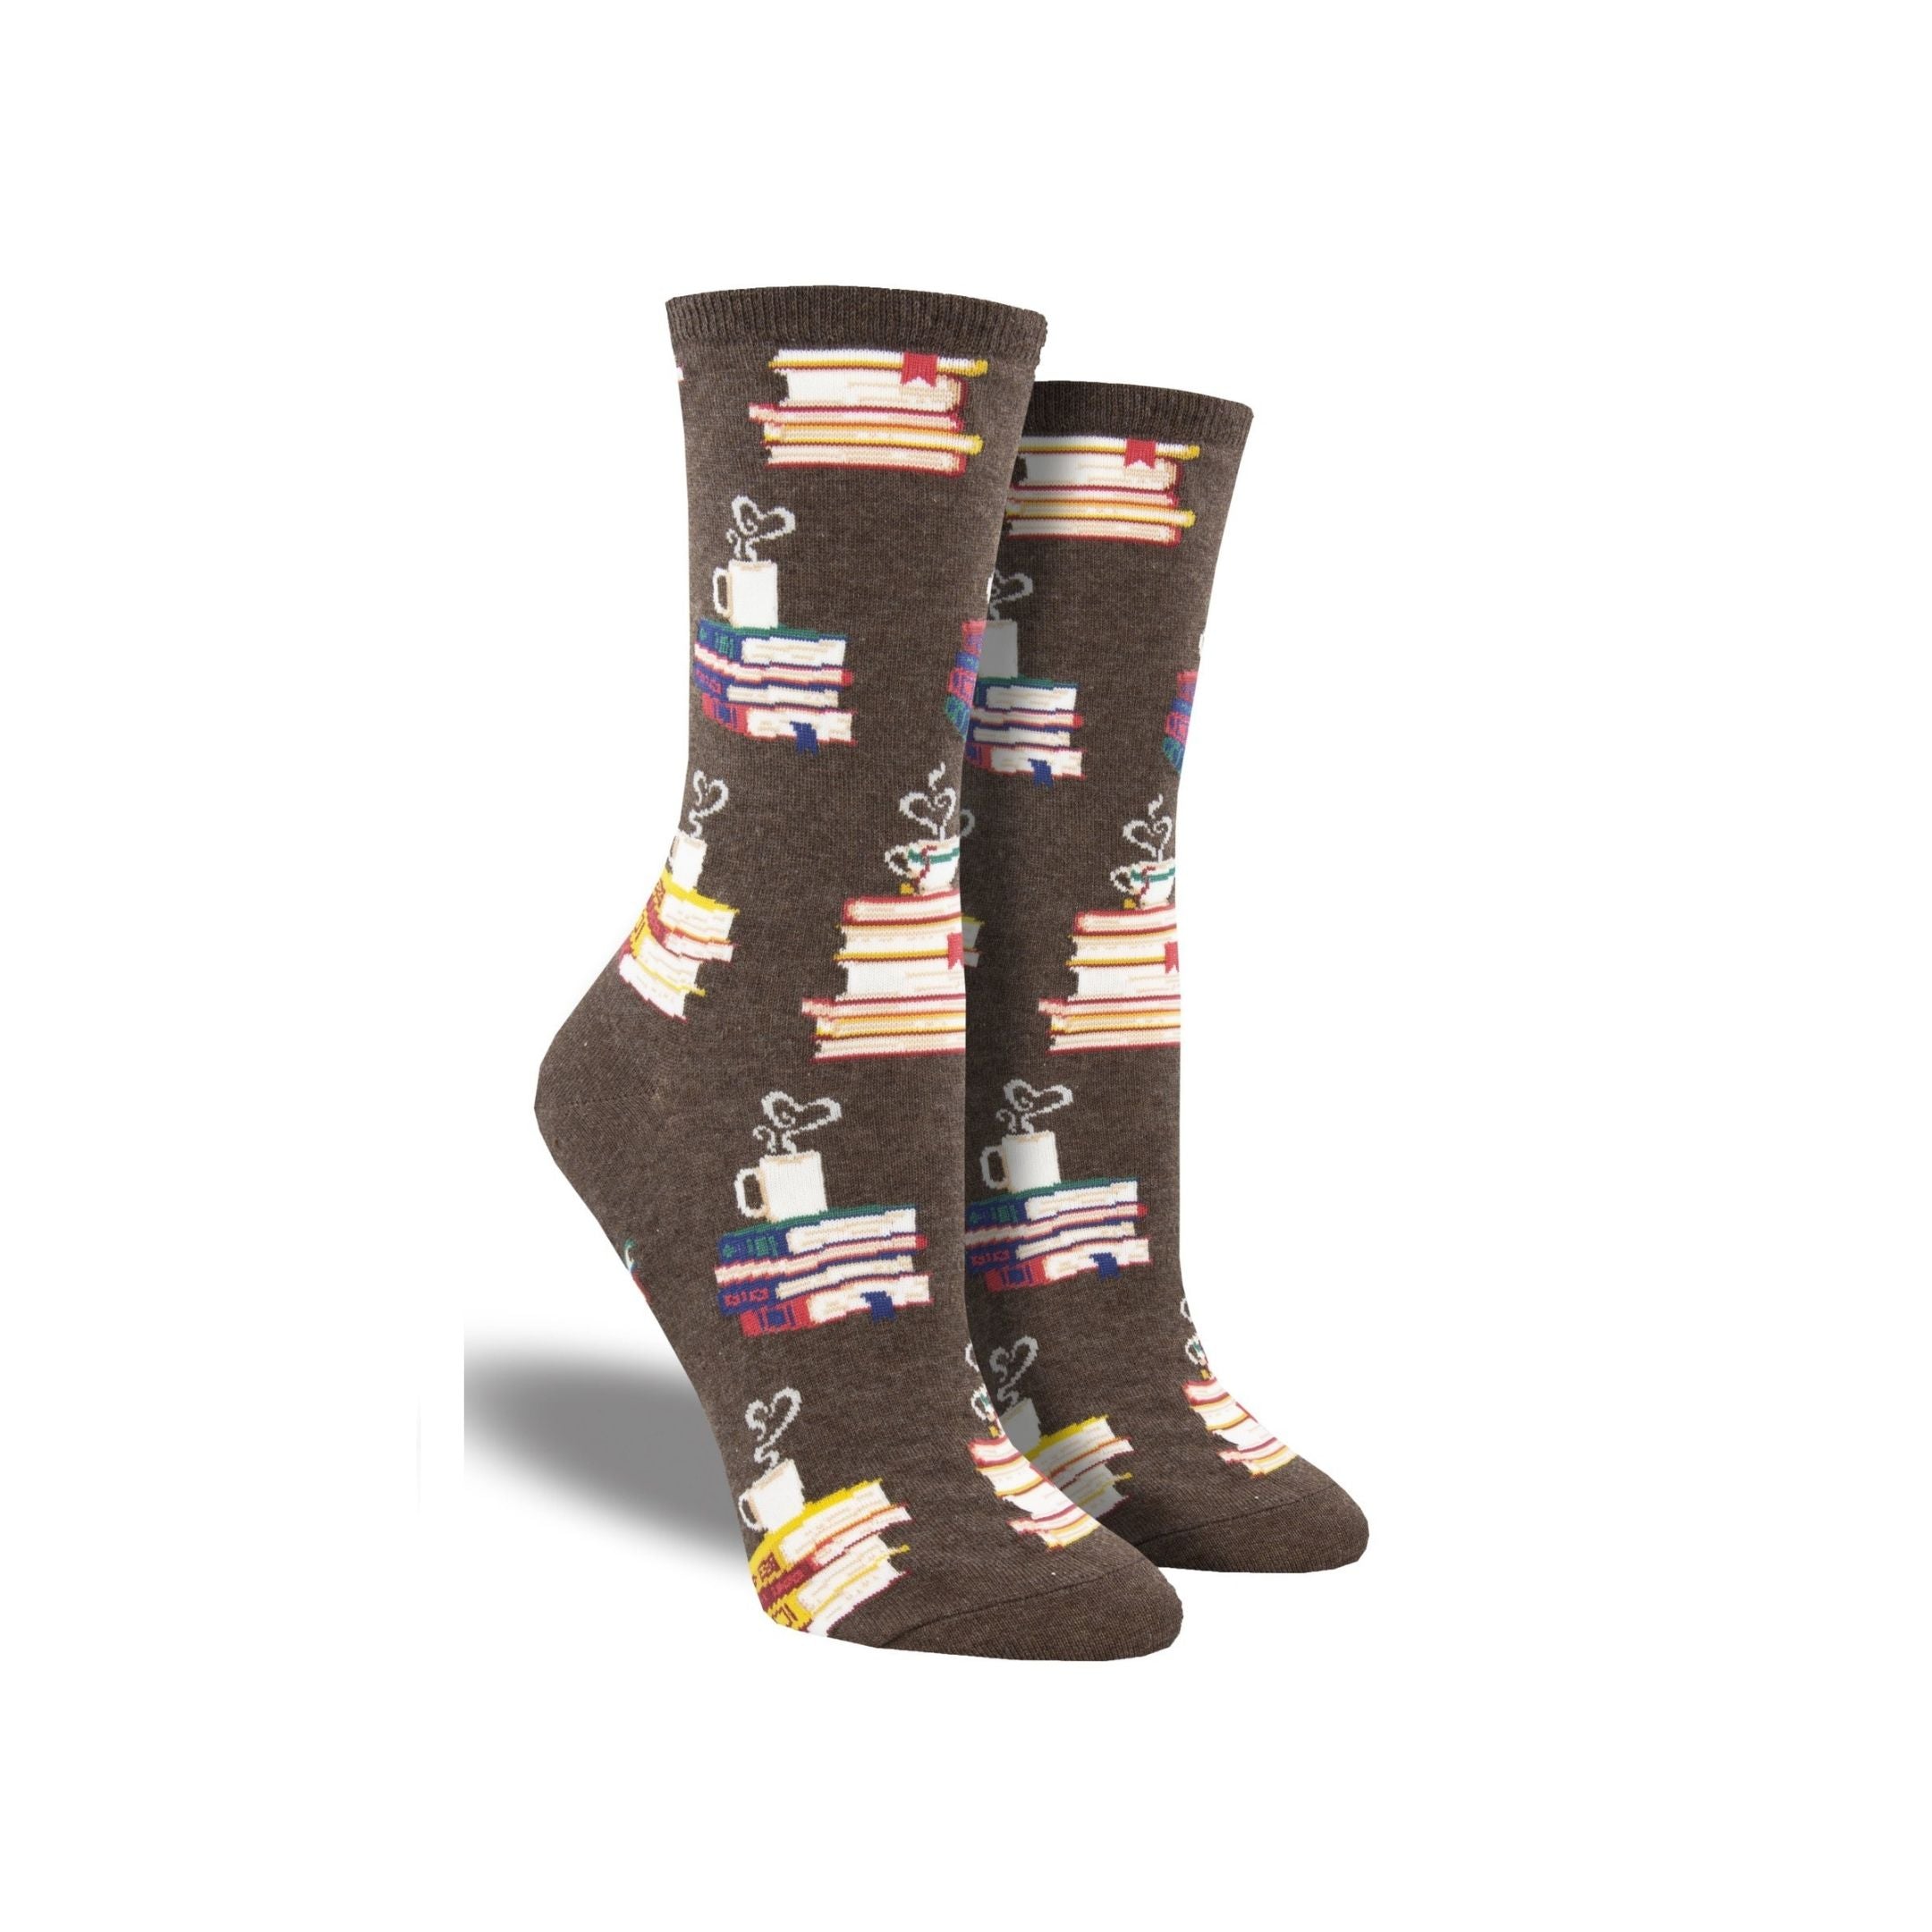 Brown socks with stacks of books and coffee mug at top